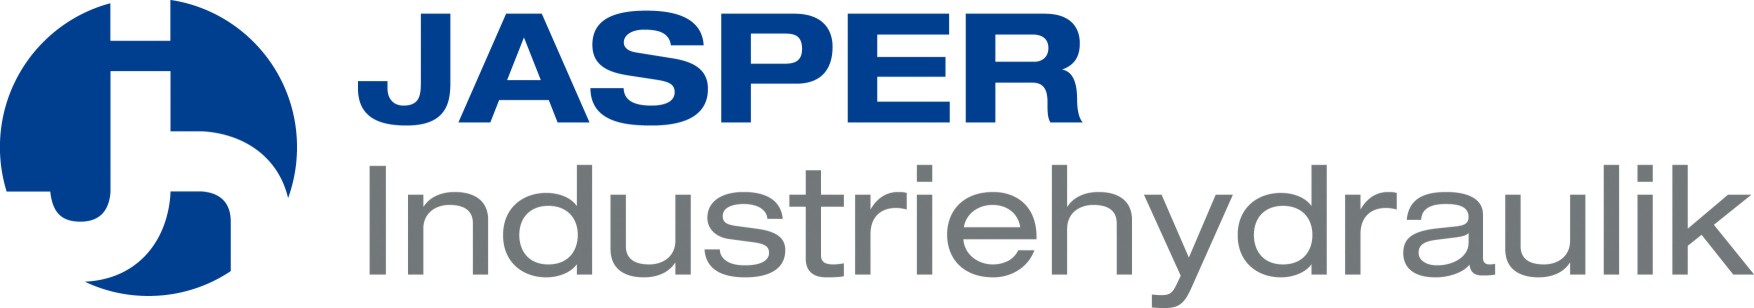 Jasper Industriehydraulik GmbH & Co. KG Logo